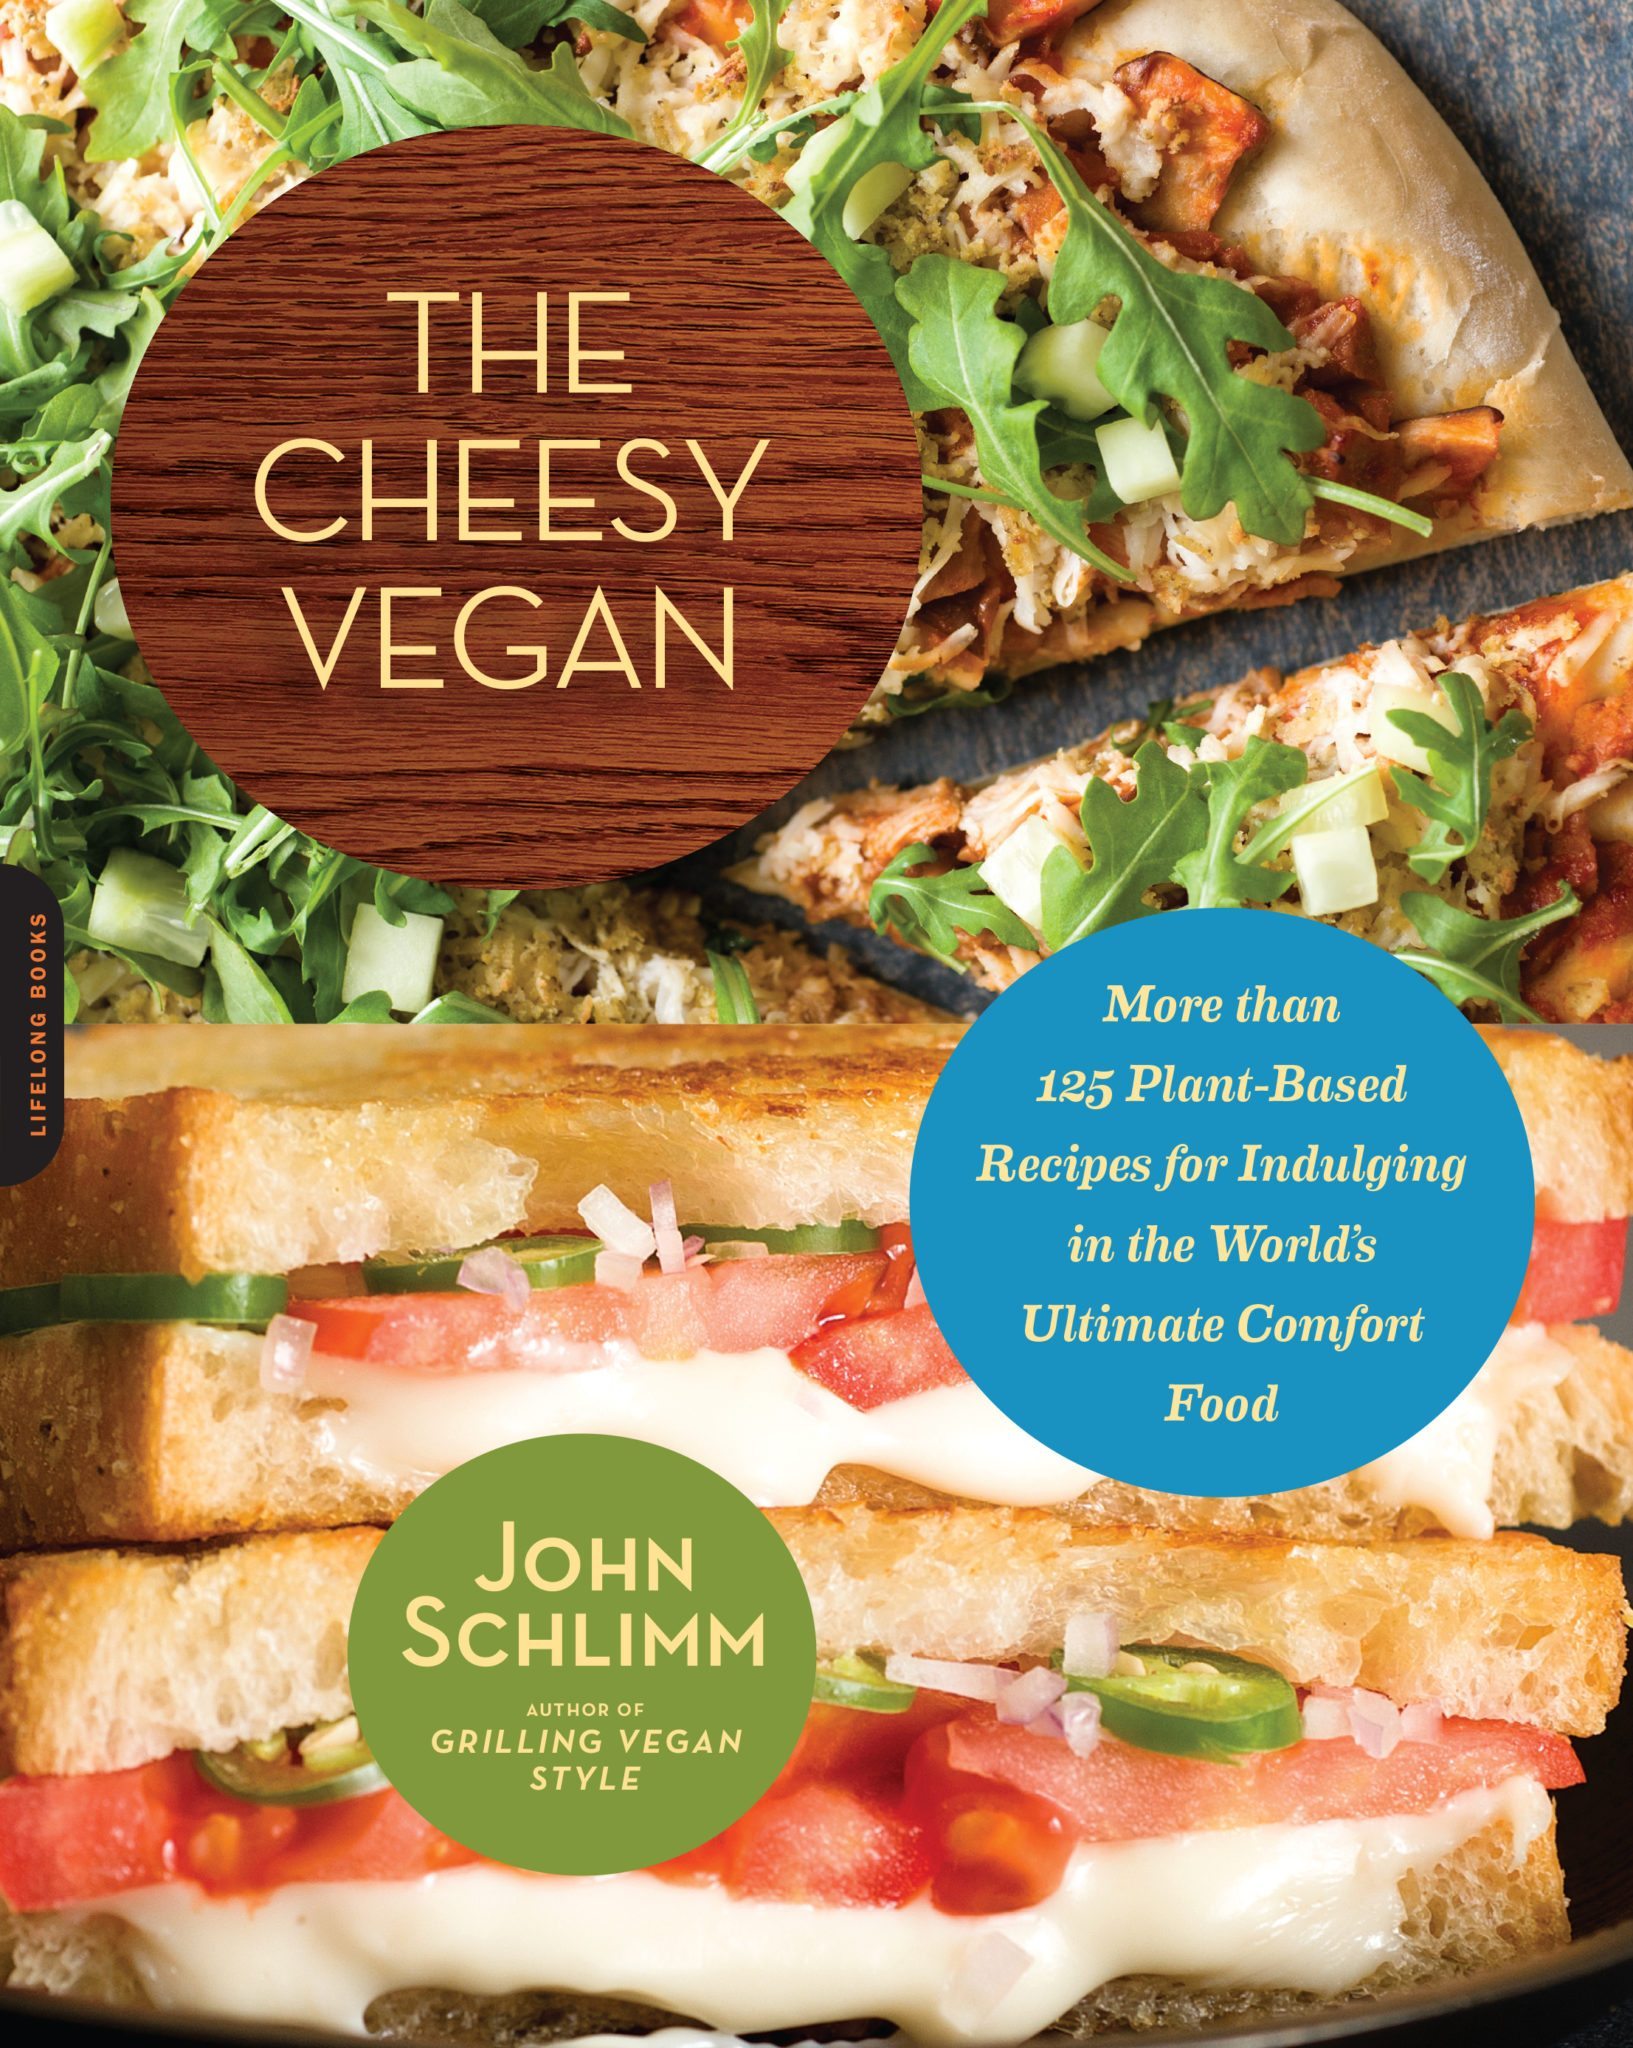 COVER - Final - The Cheesy Vegan by John Schlimm